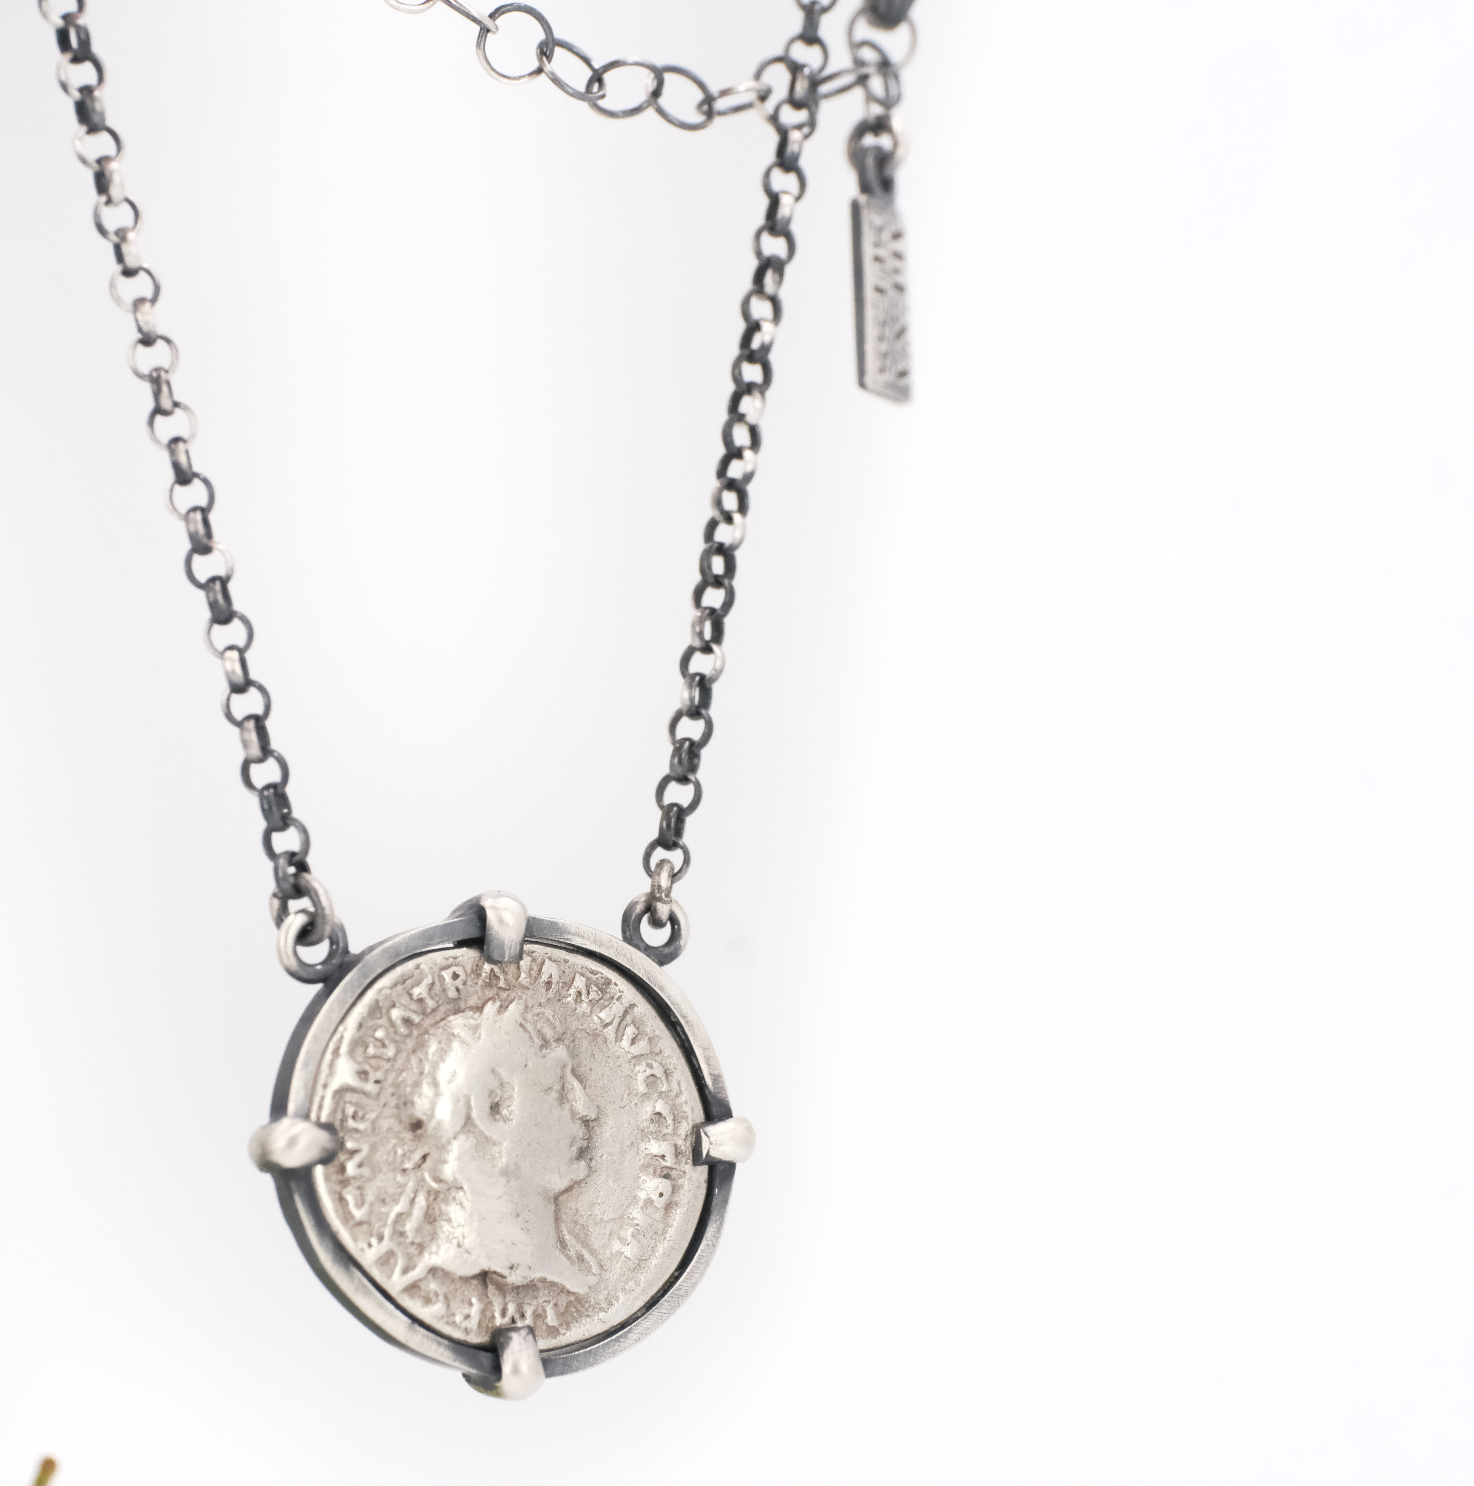 Roman Silver Denarius Coin Necklace - 110 AD - One of a Kind